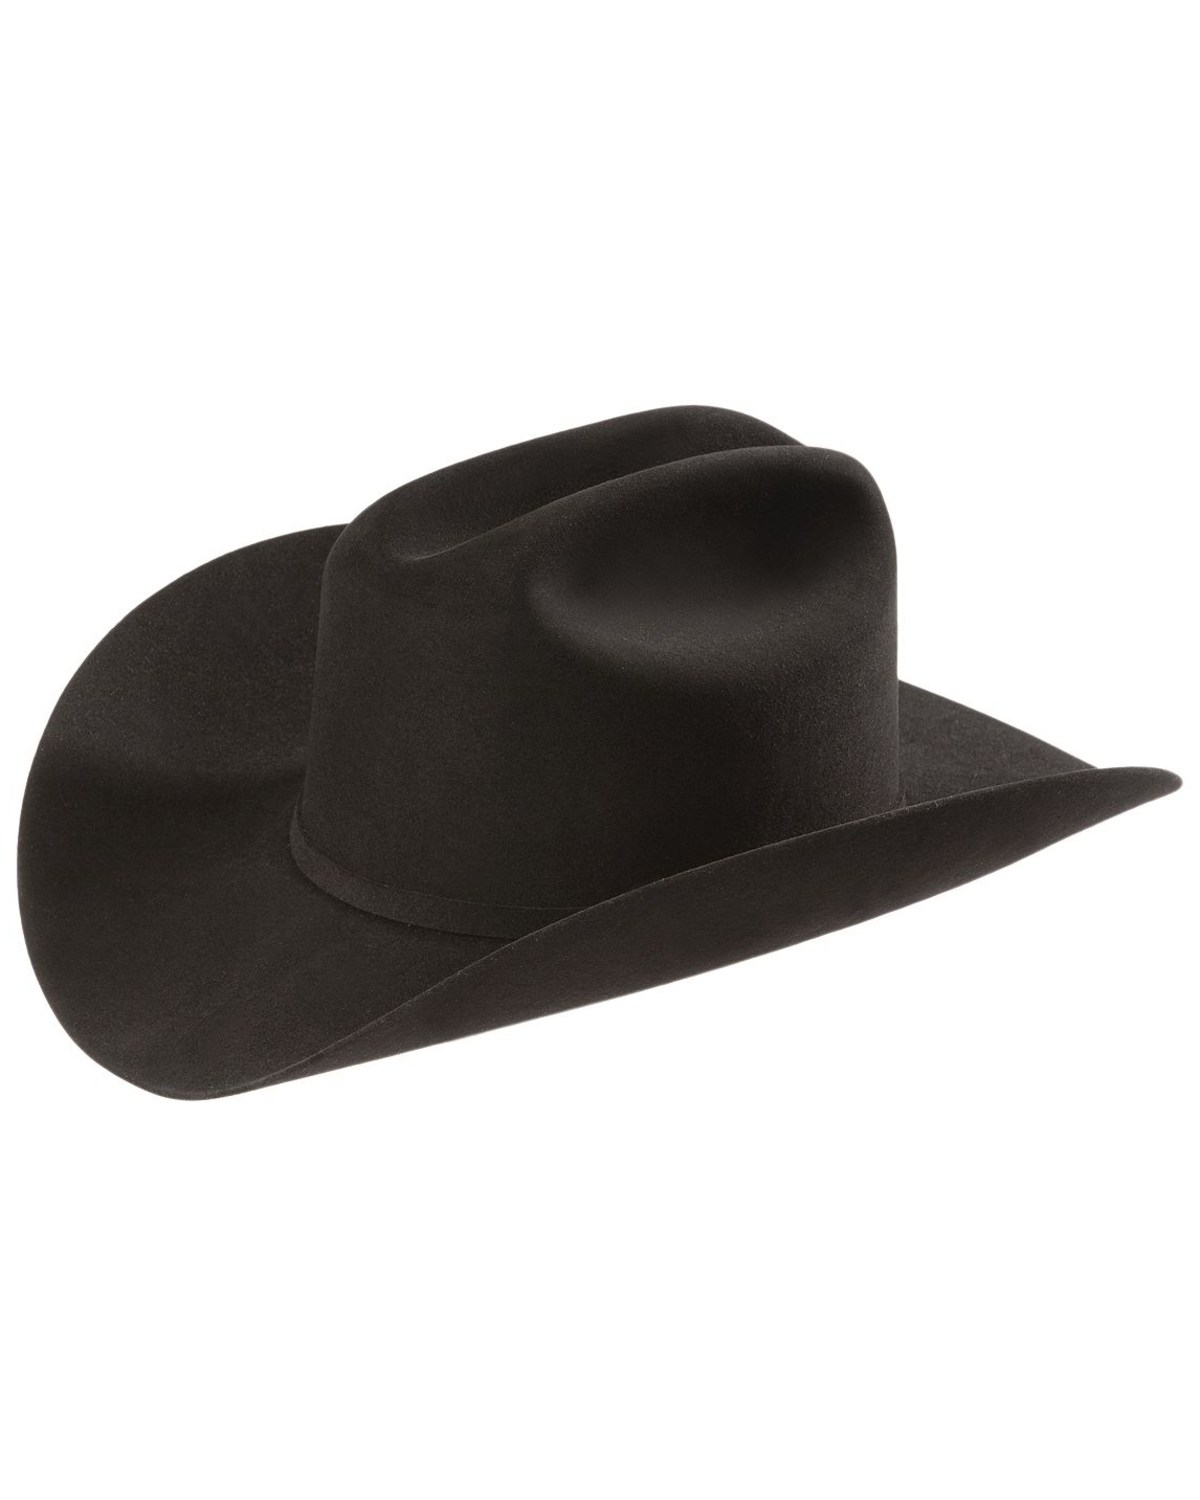 Larry Mahan 6X Felt Cowboy Hat